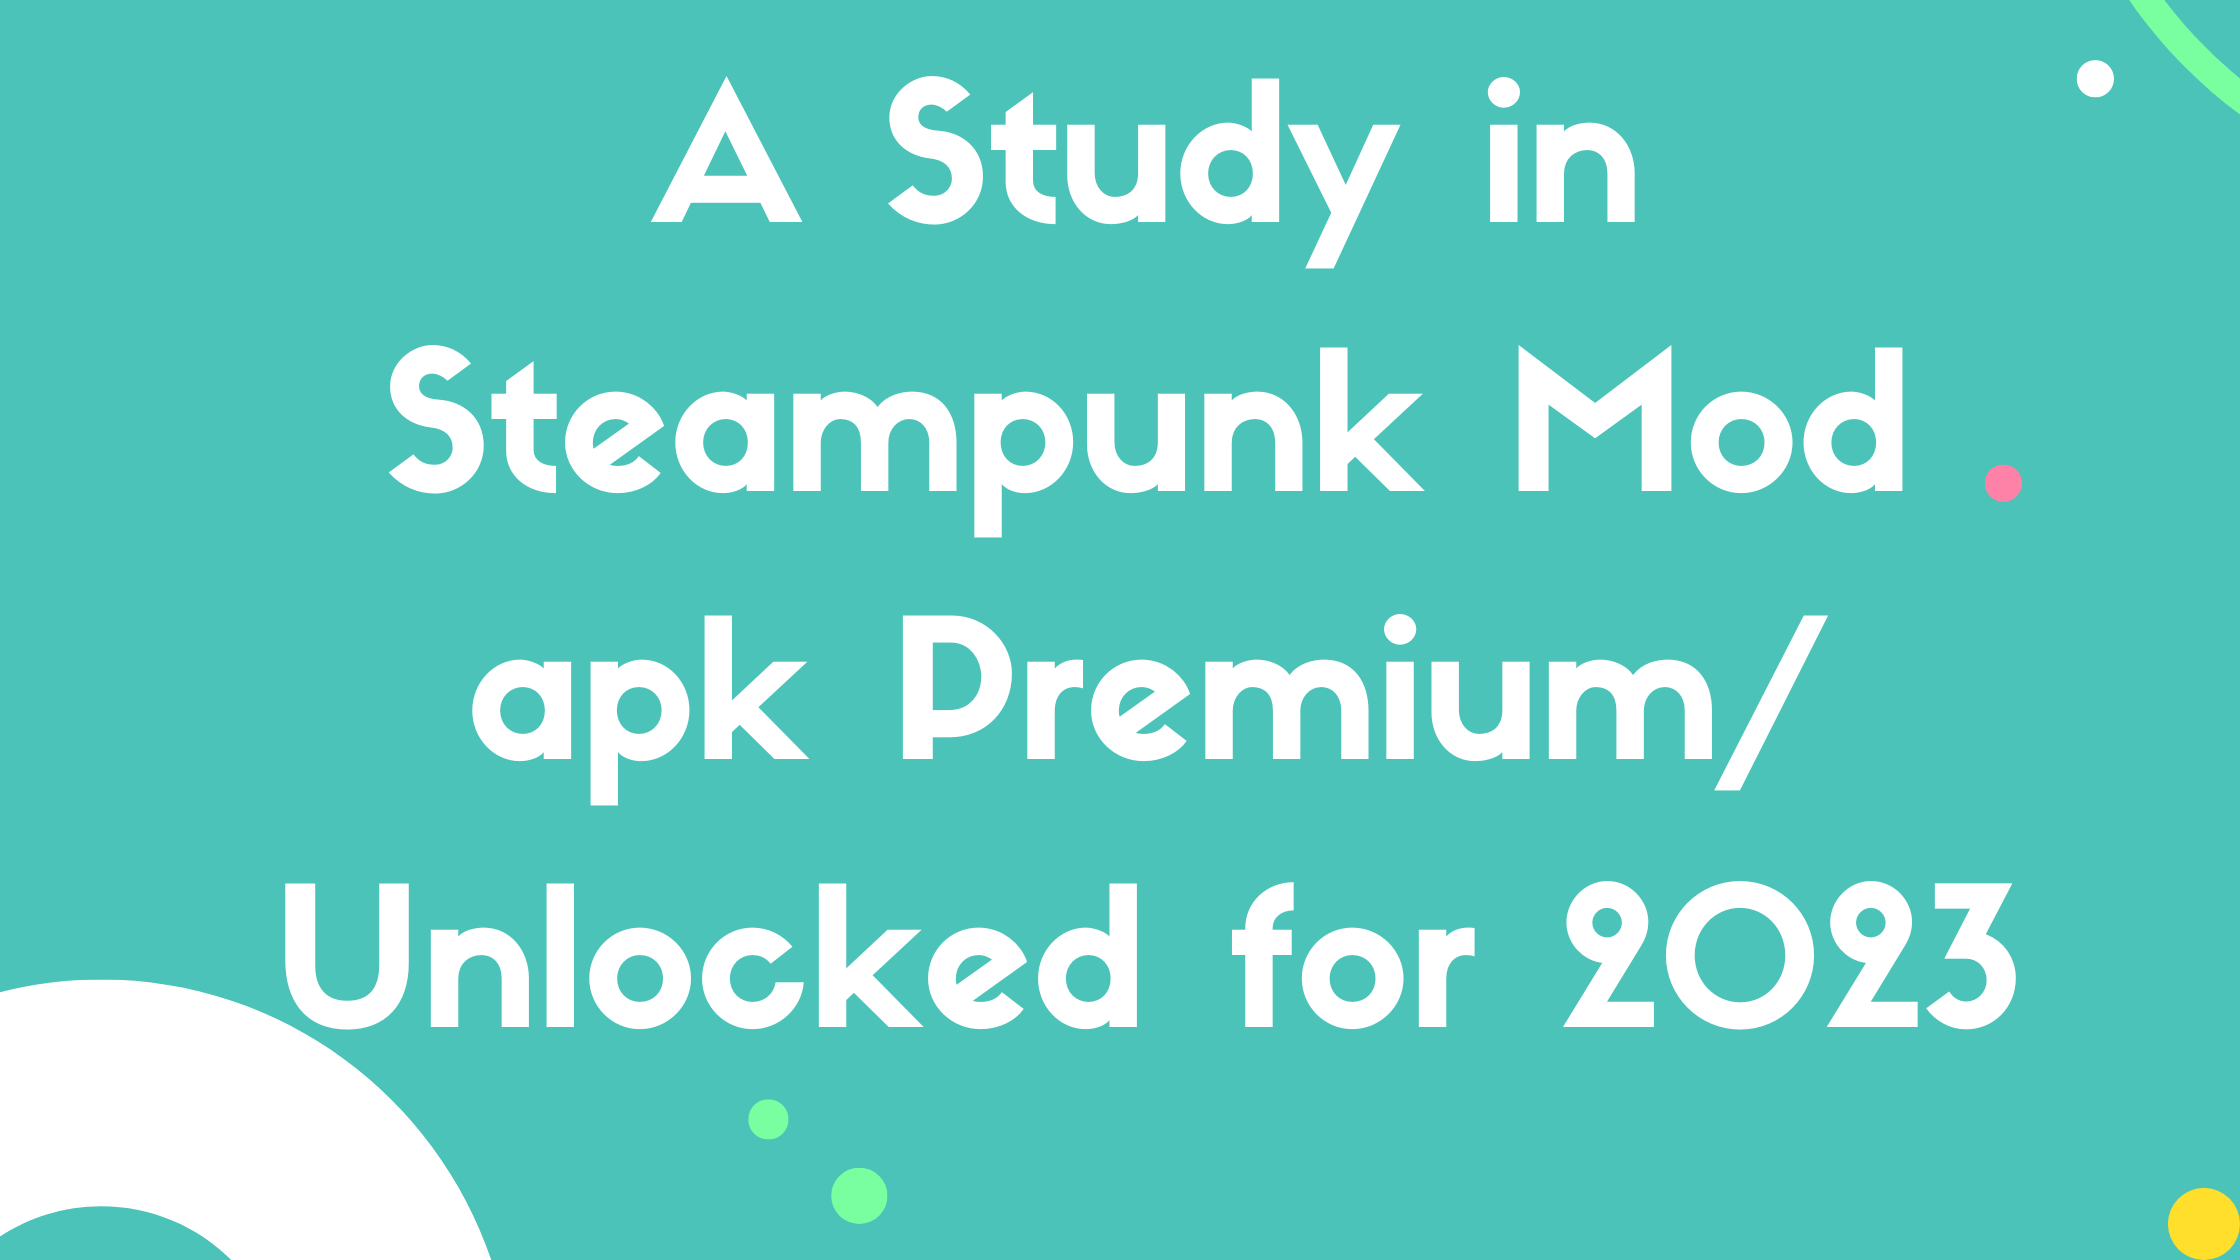 A Study in Steampunk Mod apk Premium/ Unlocked for 2023